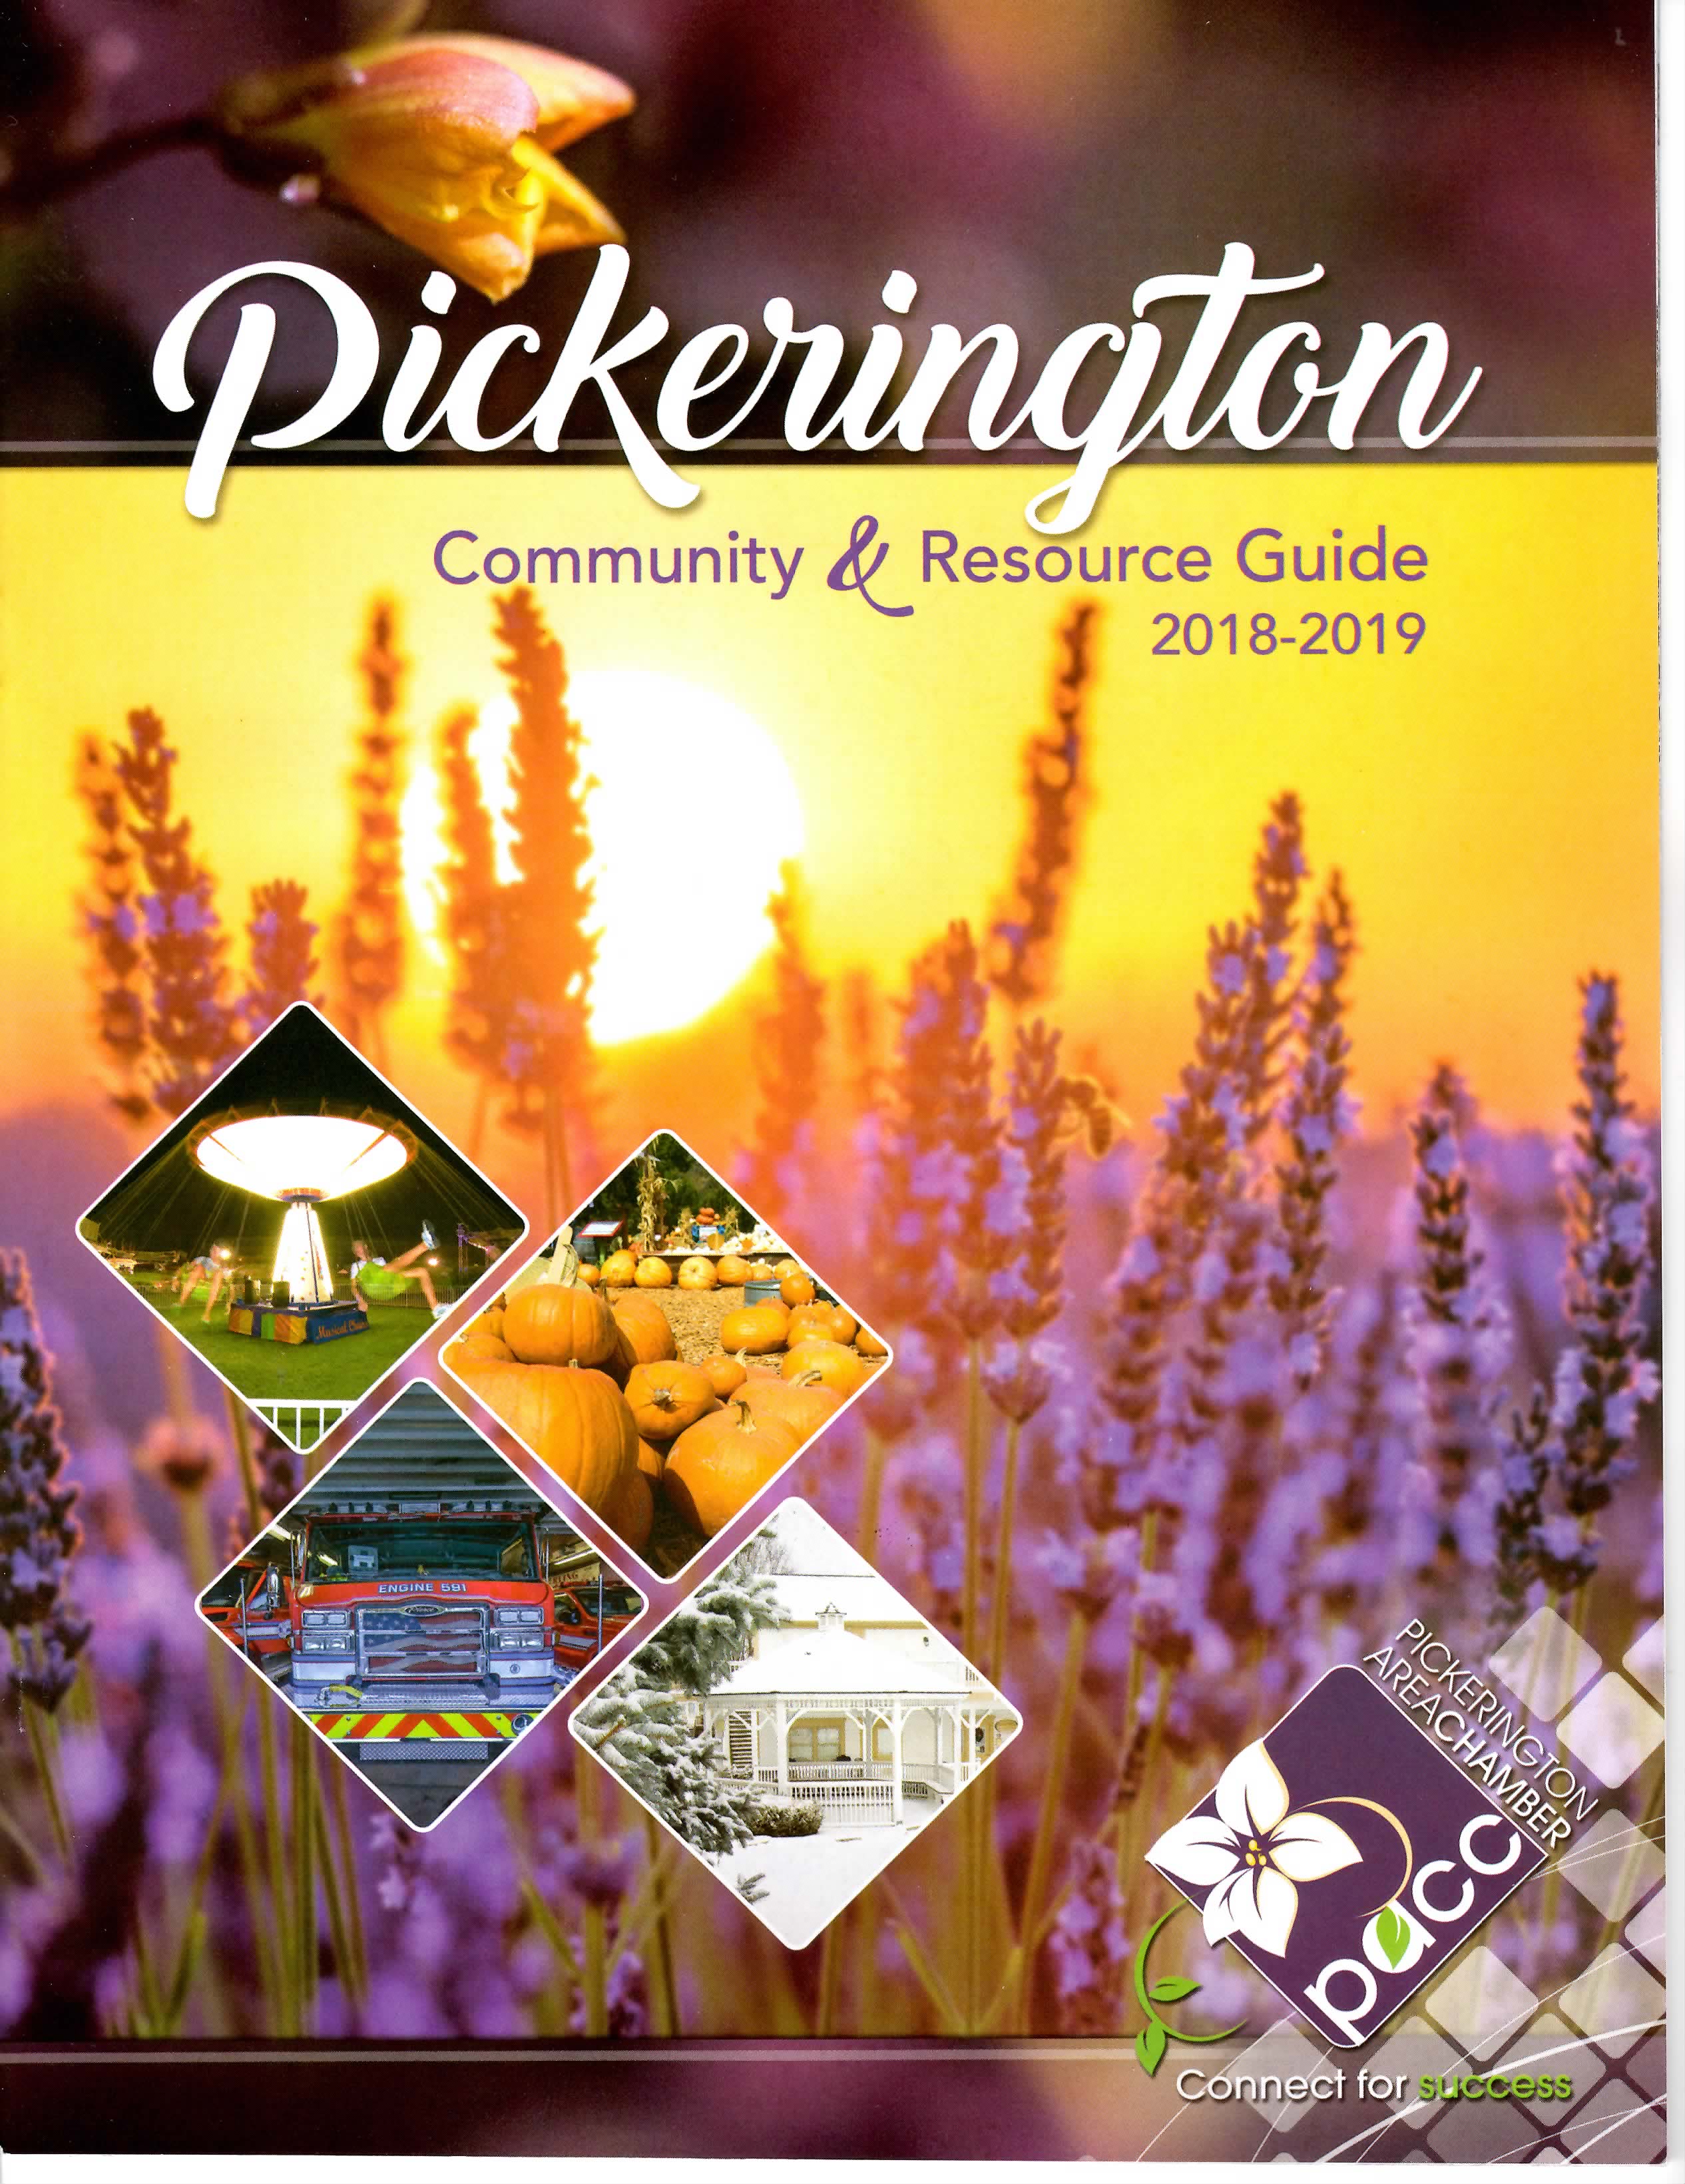 2016 pickerington Magazine